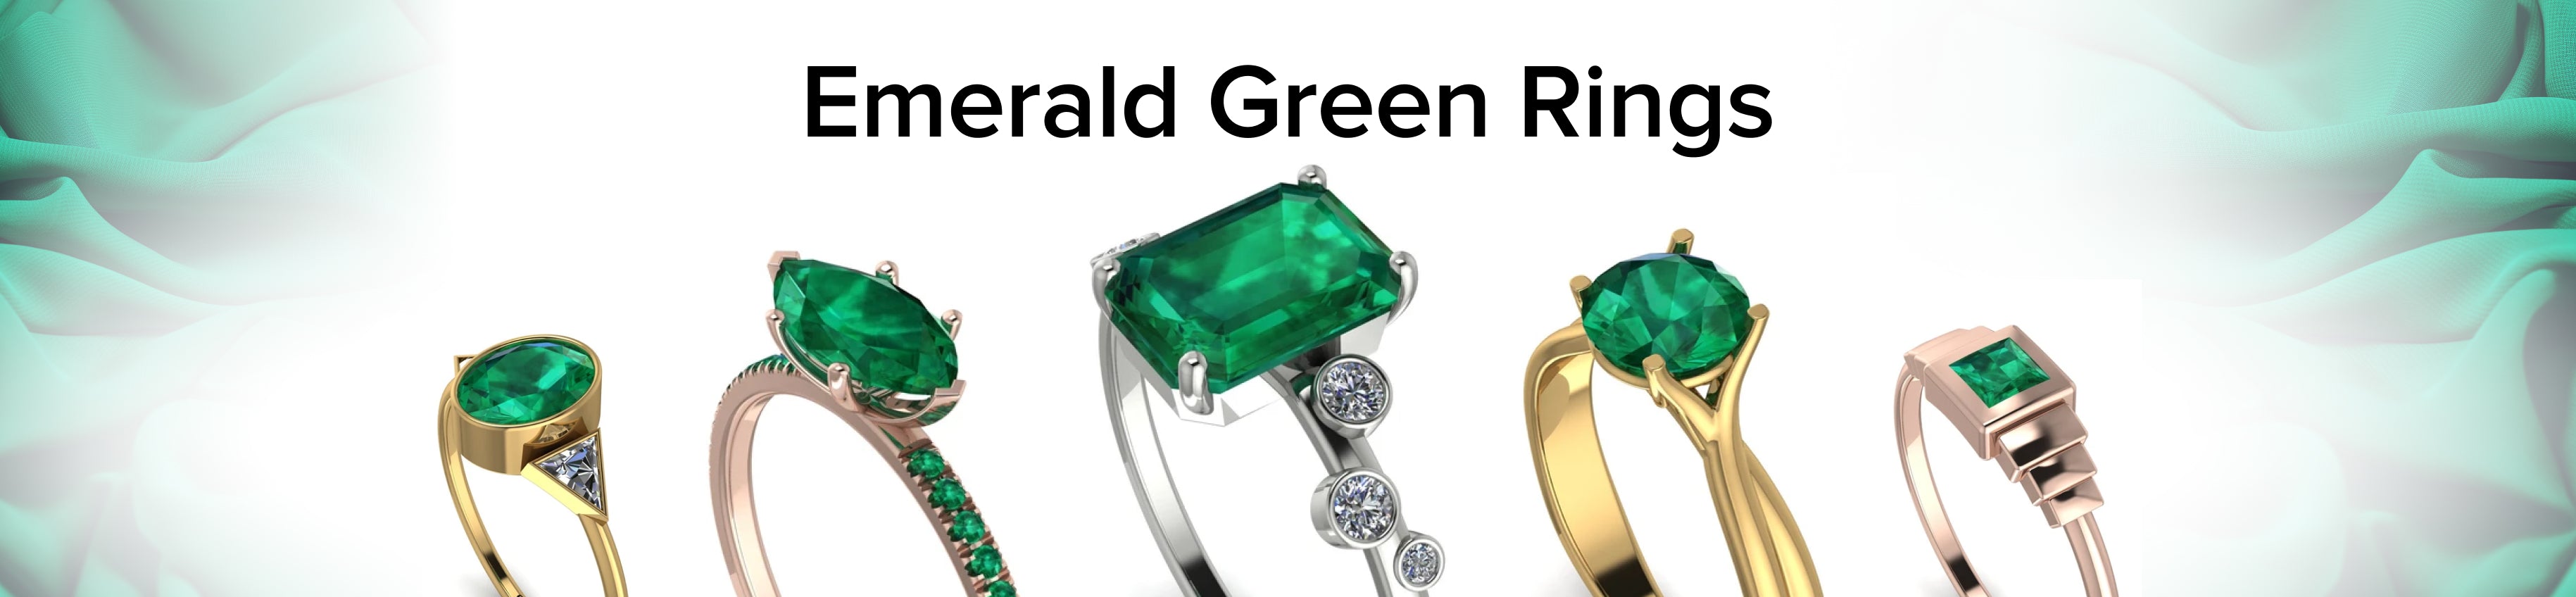 Wedding Emerald Green Rings Banner